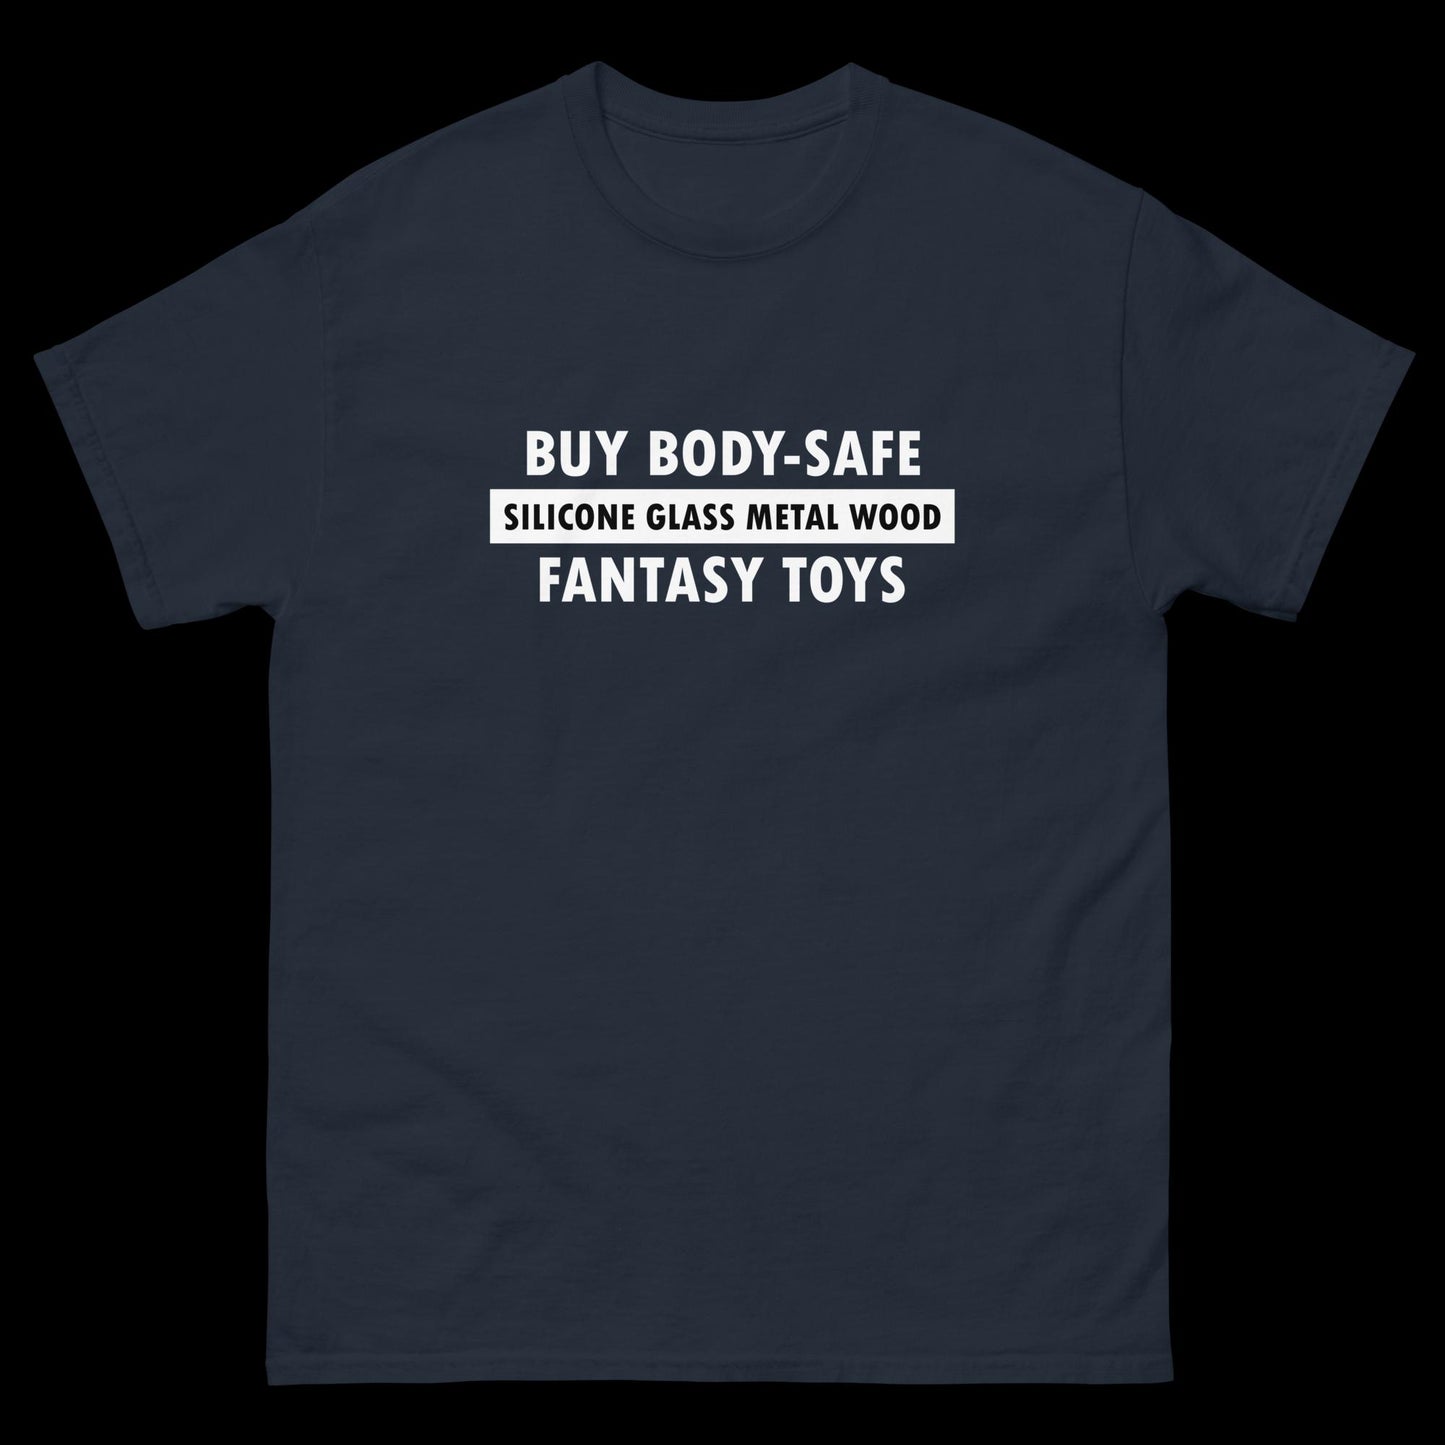 Buy Body-Safe Fantasy Toys - Classic T-Shirt